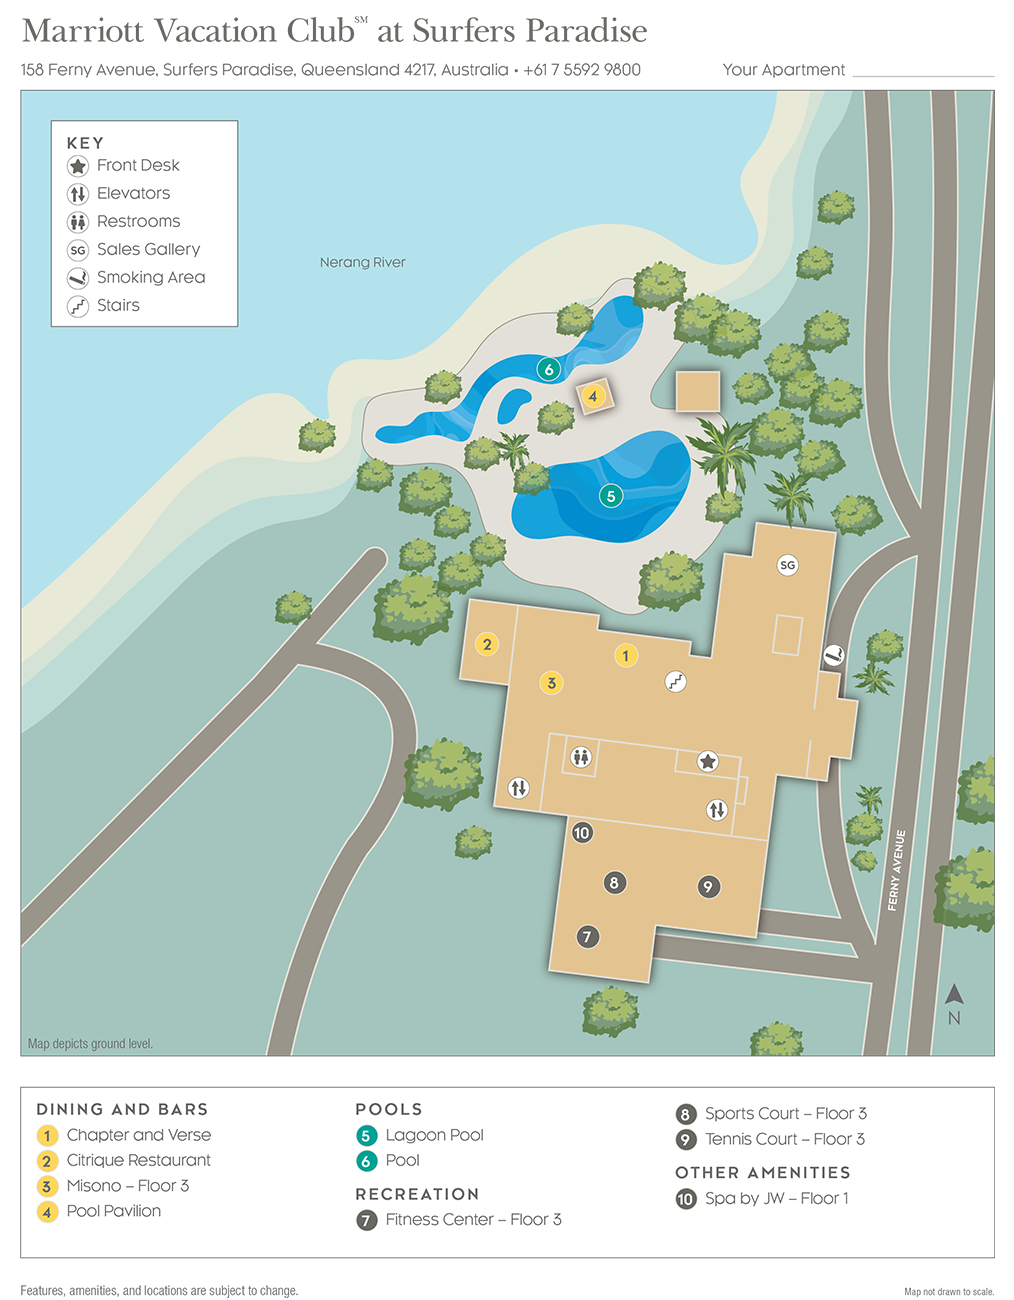 Marriott Vacation Club at Surfers Paradise Resort Map